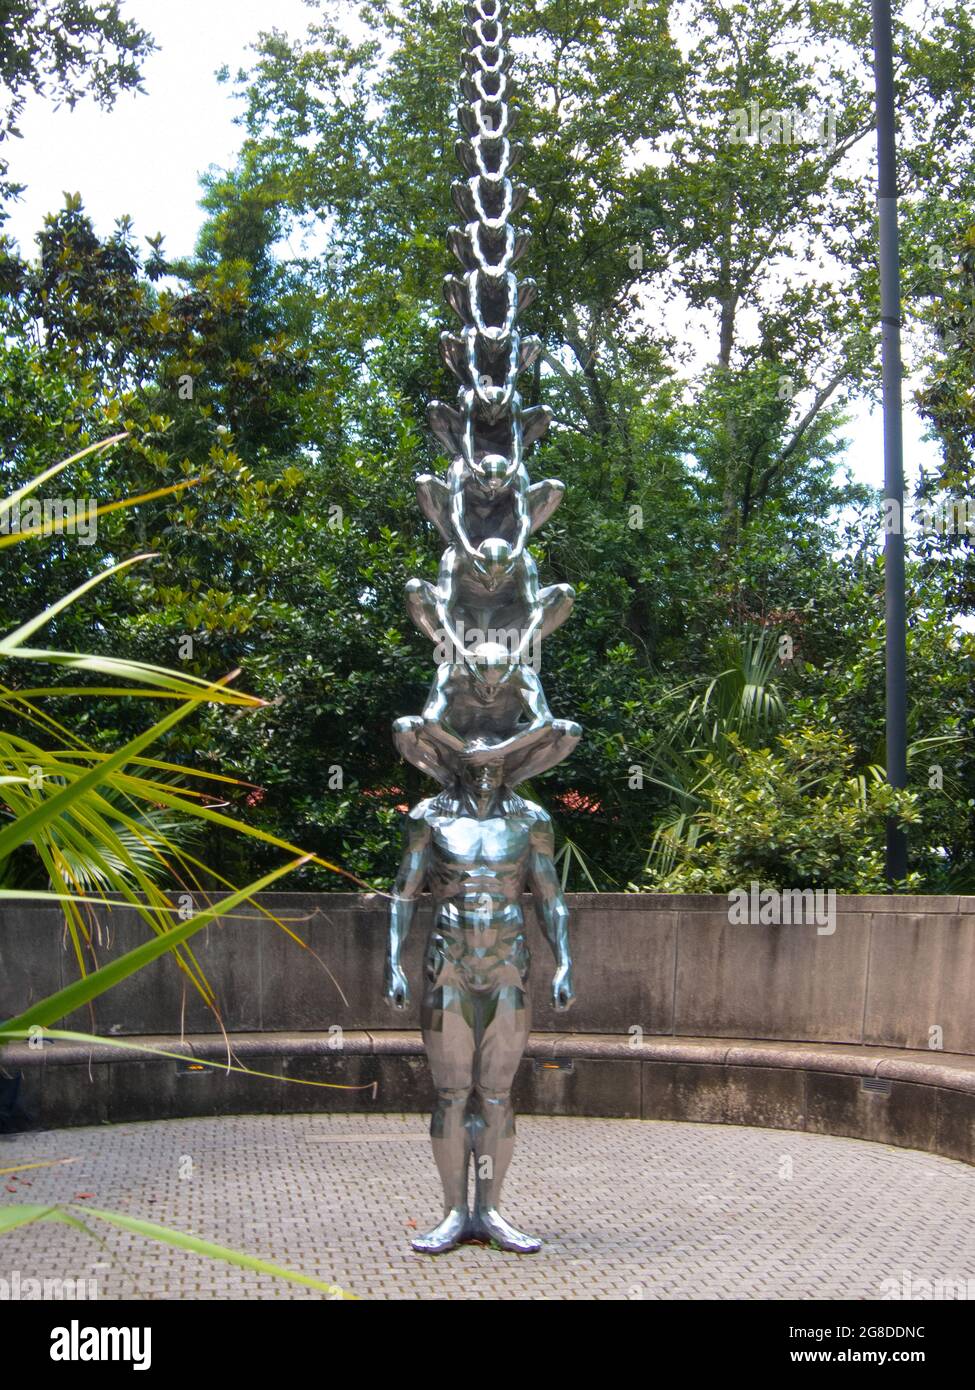 'Karma' by Korean artist Do Ho Suh, in New Orleans City Park Besthoff Sculpture Garden. Stock Photo